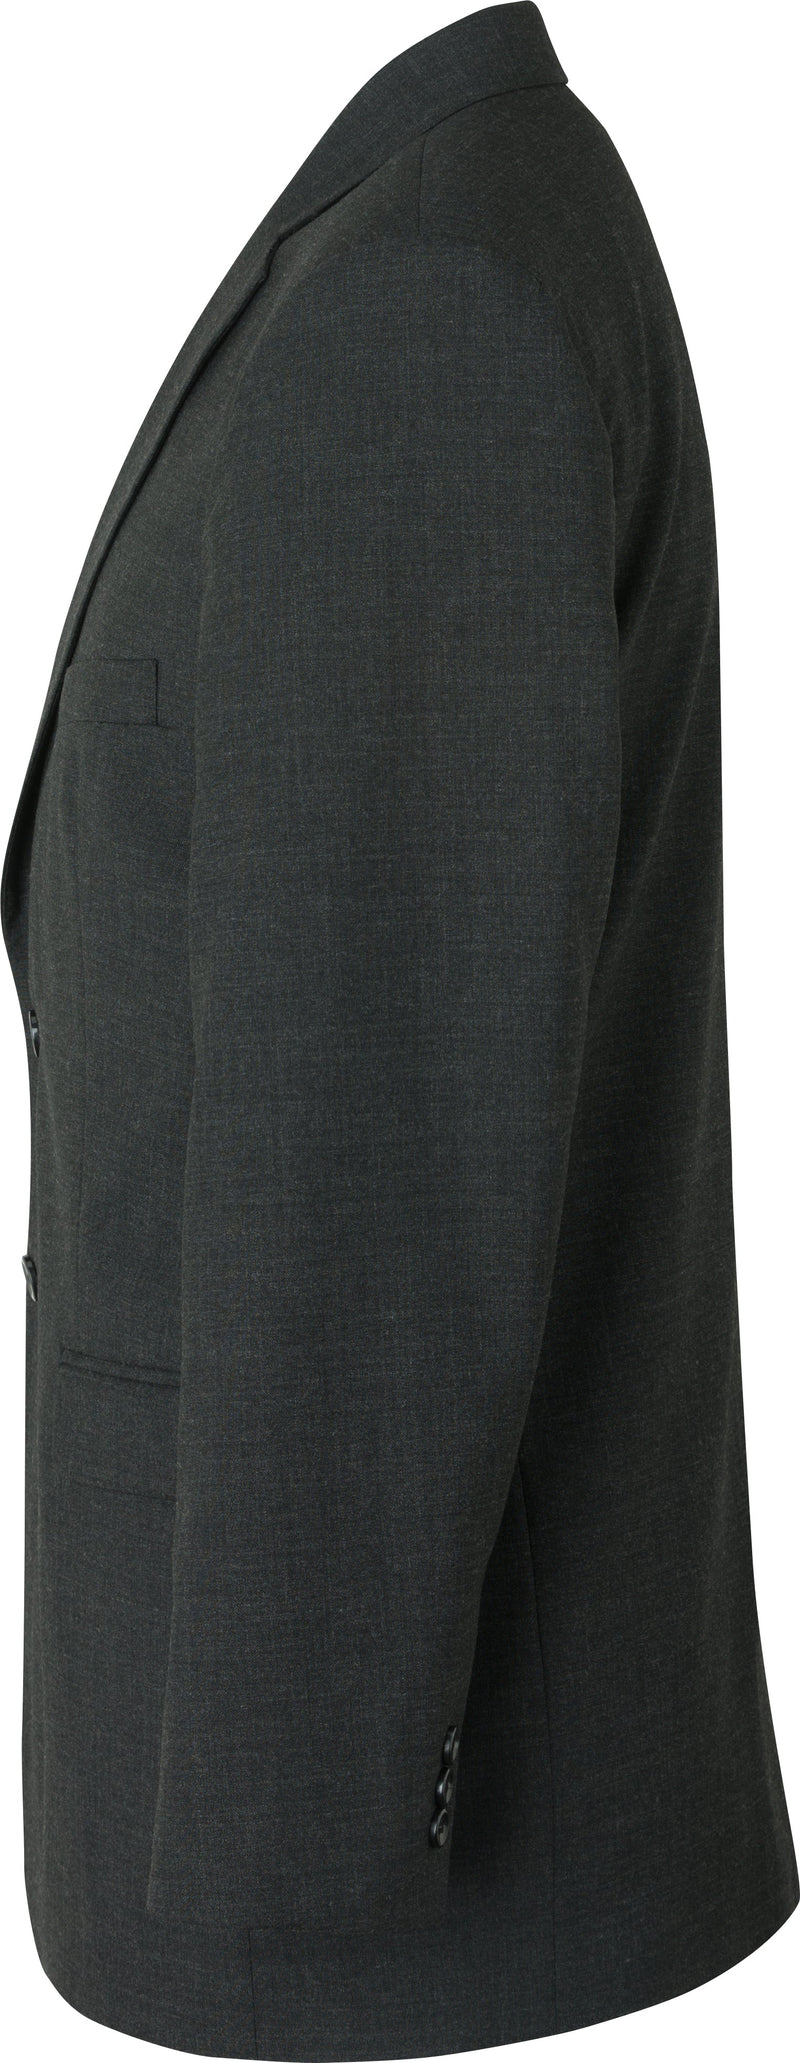 Edwards [3633] Men’s Suit Coat with Single Back Vent. Redwood & Ross Signature Collection. Live Chat For Bulk Discounts.